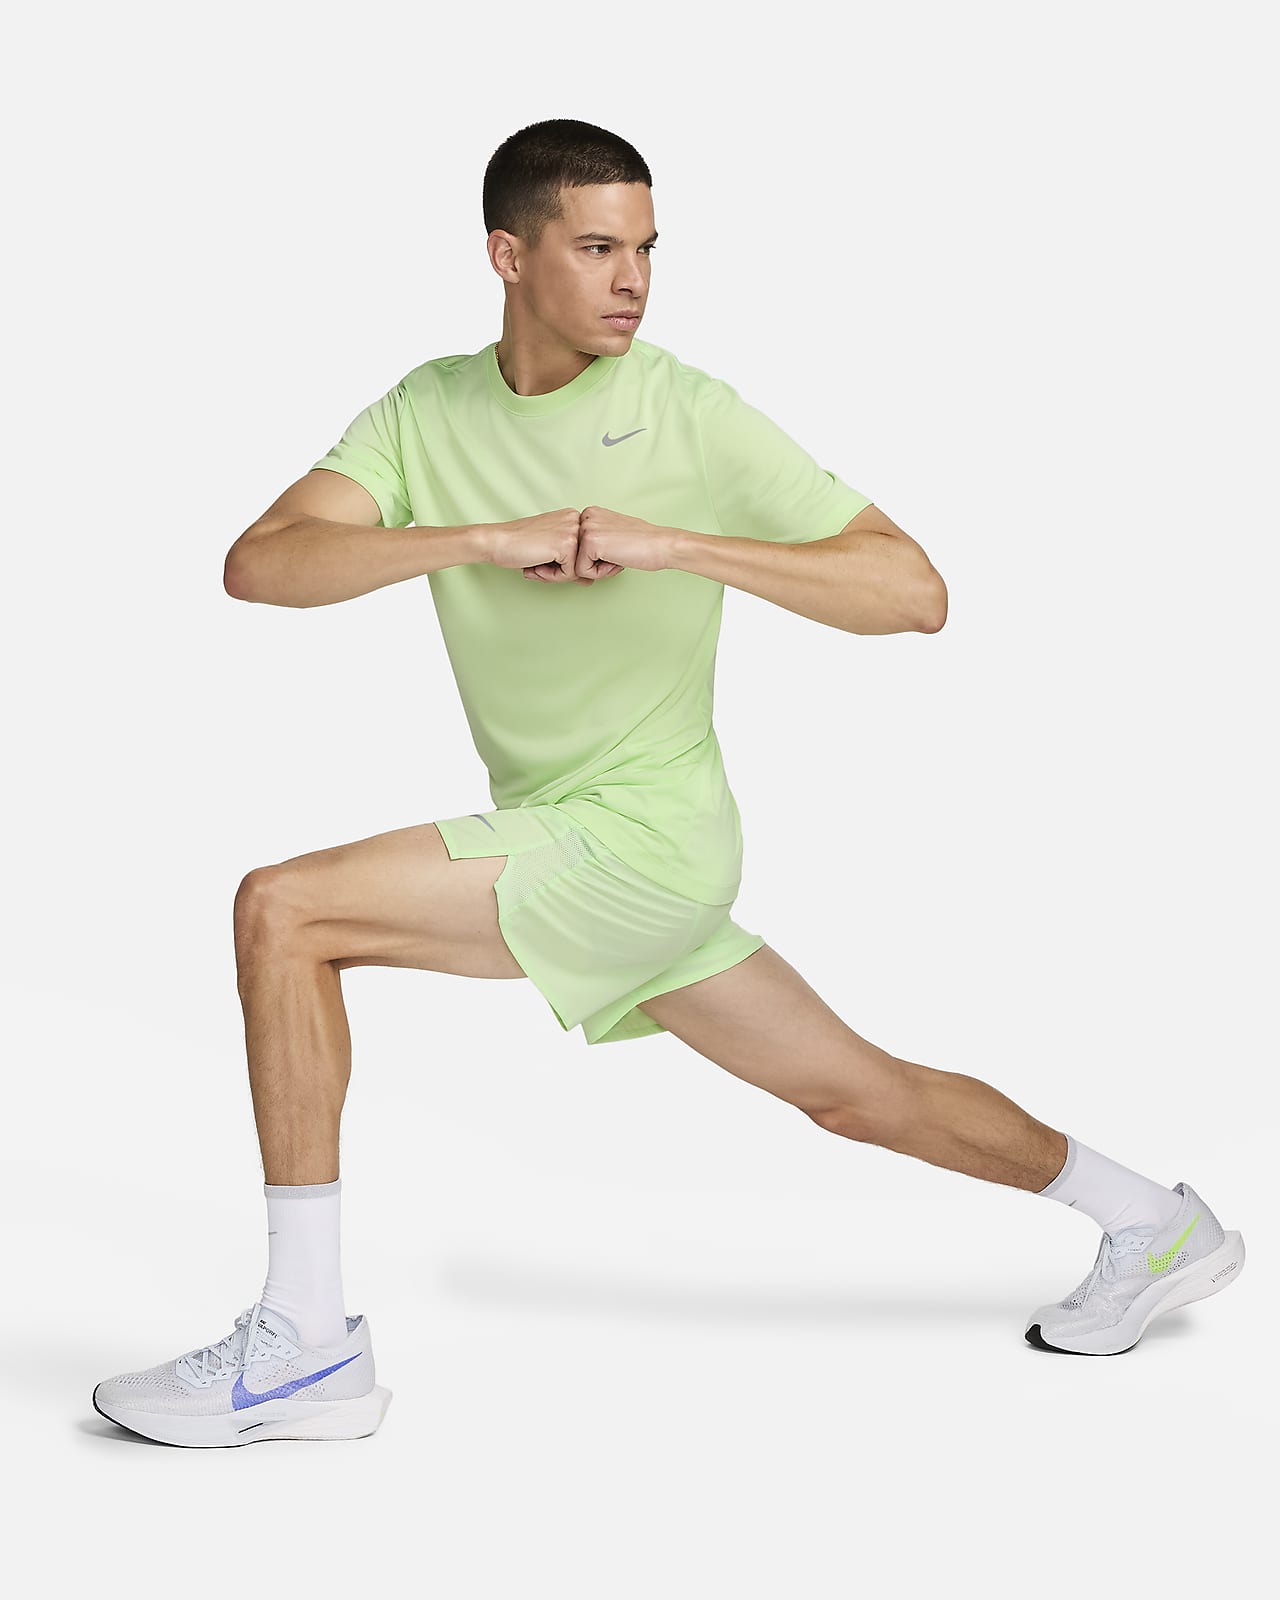 Nike Running Shorts, Mens & Womens